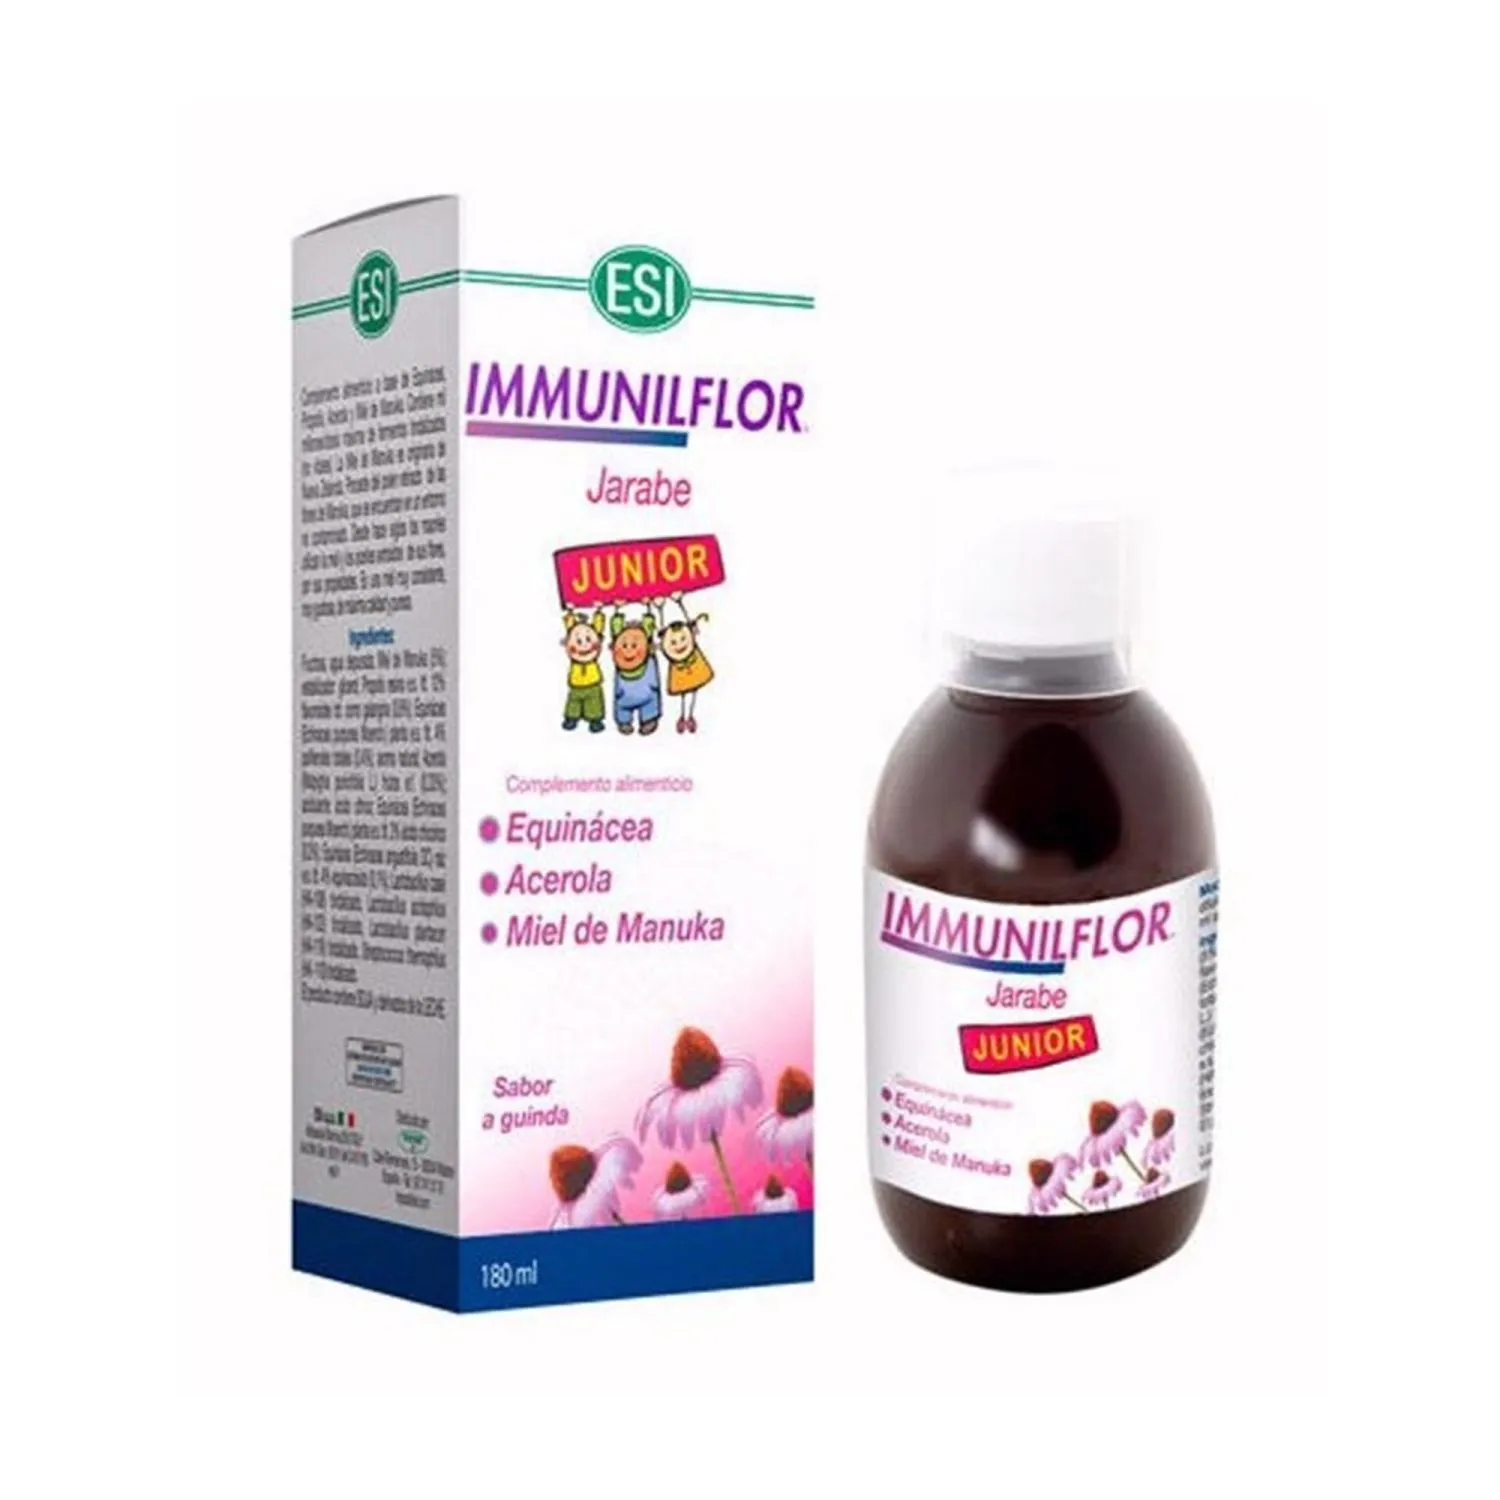 Immunilflor Junior sirop x 180ml (Esi)